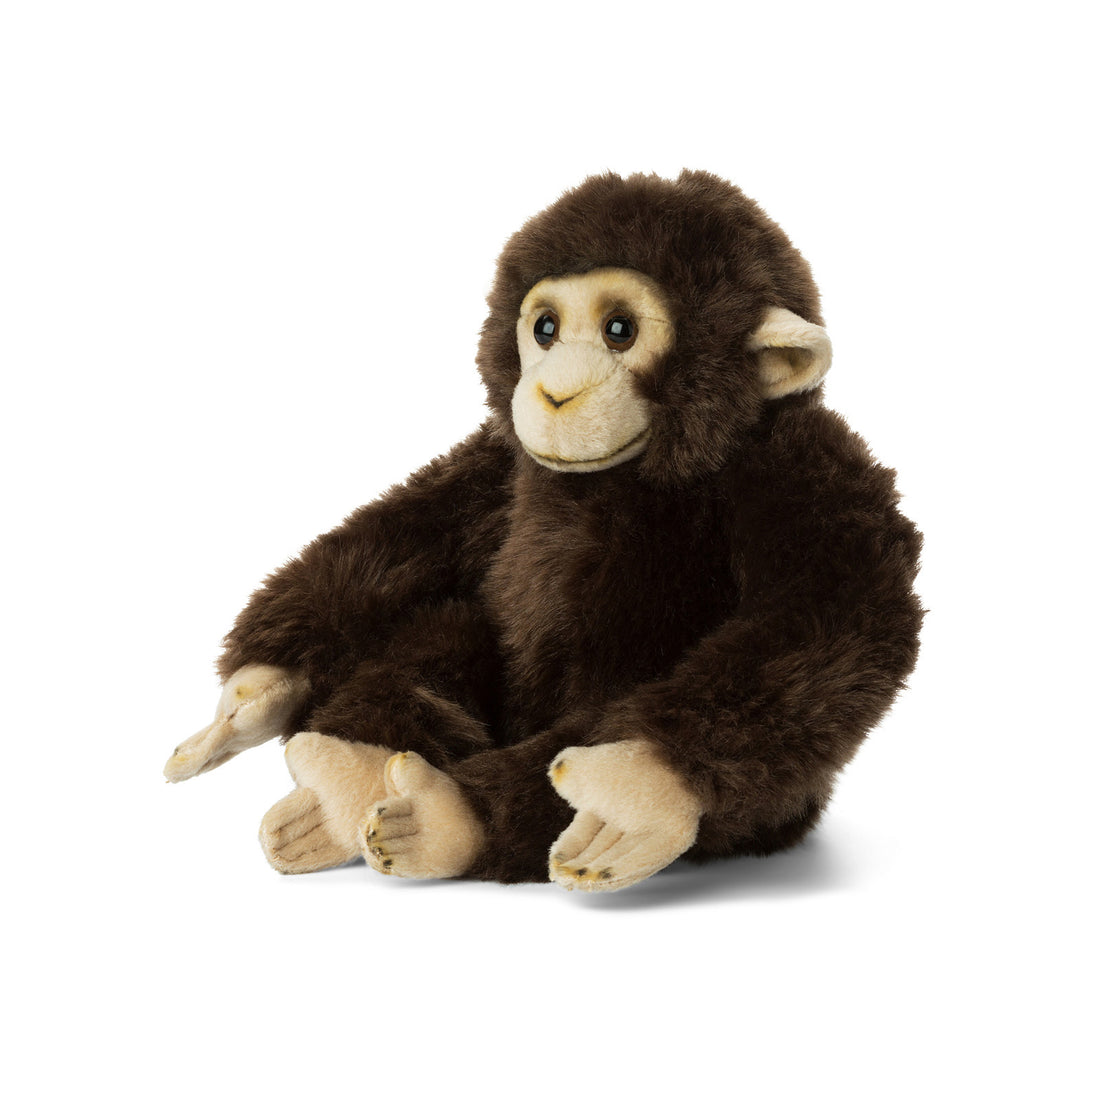 wwf-plush-chimpanzee- (2)